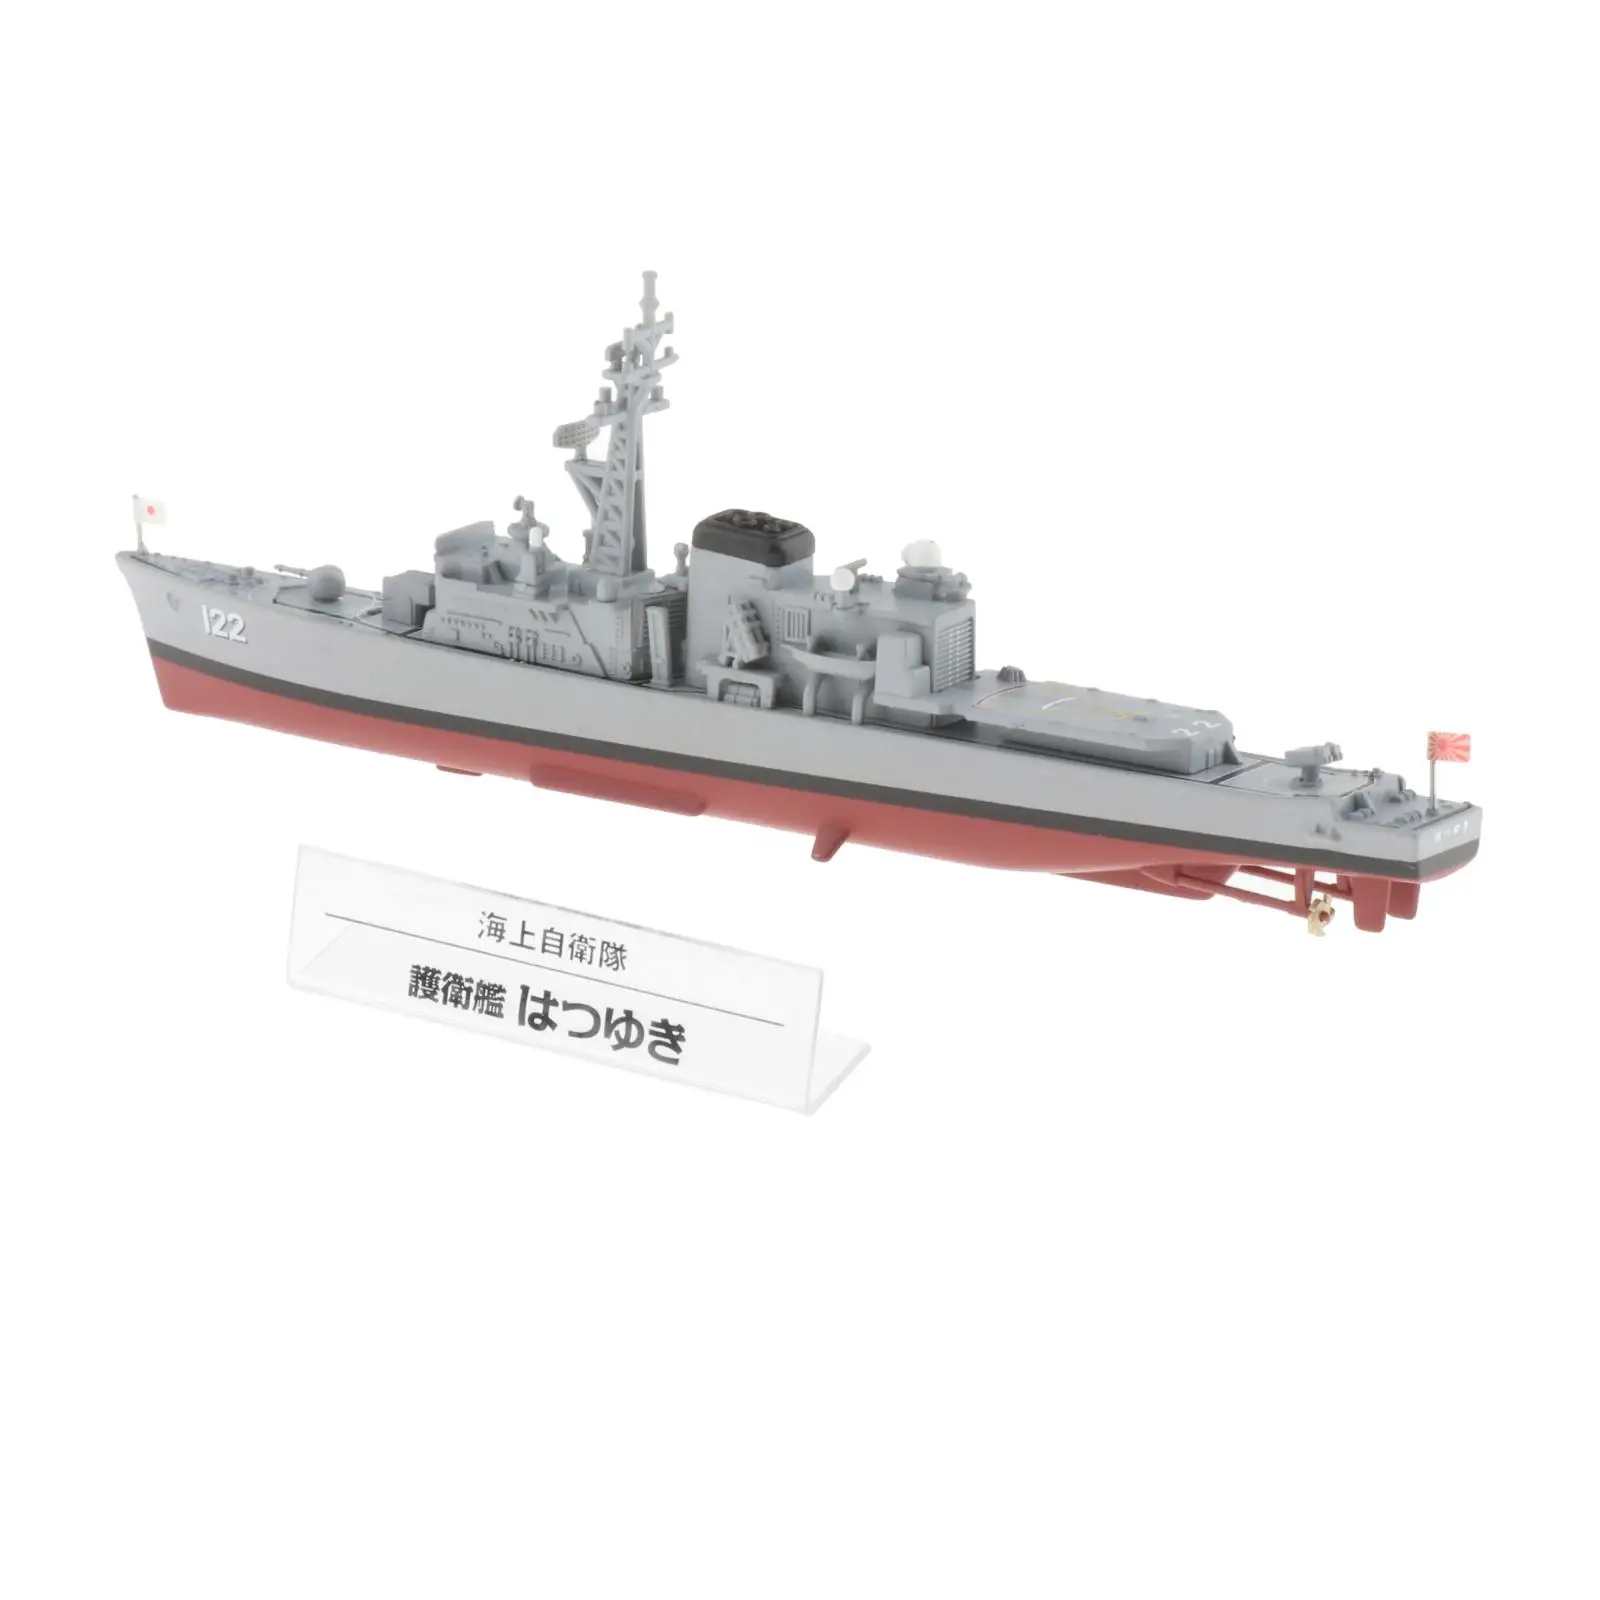 

Japan JMSDF Japan Maritime Self-Defense Force Military Model Toy